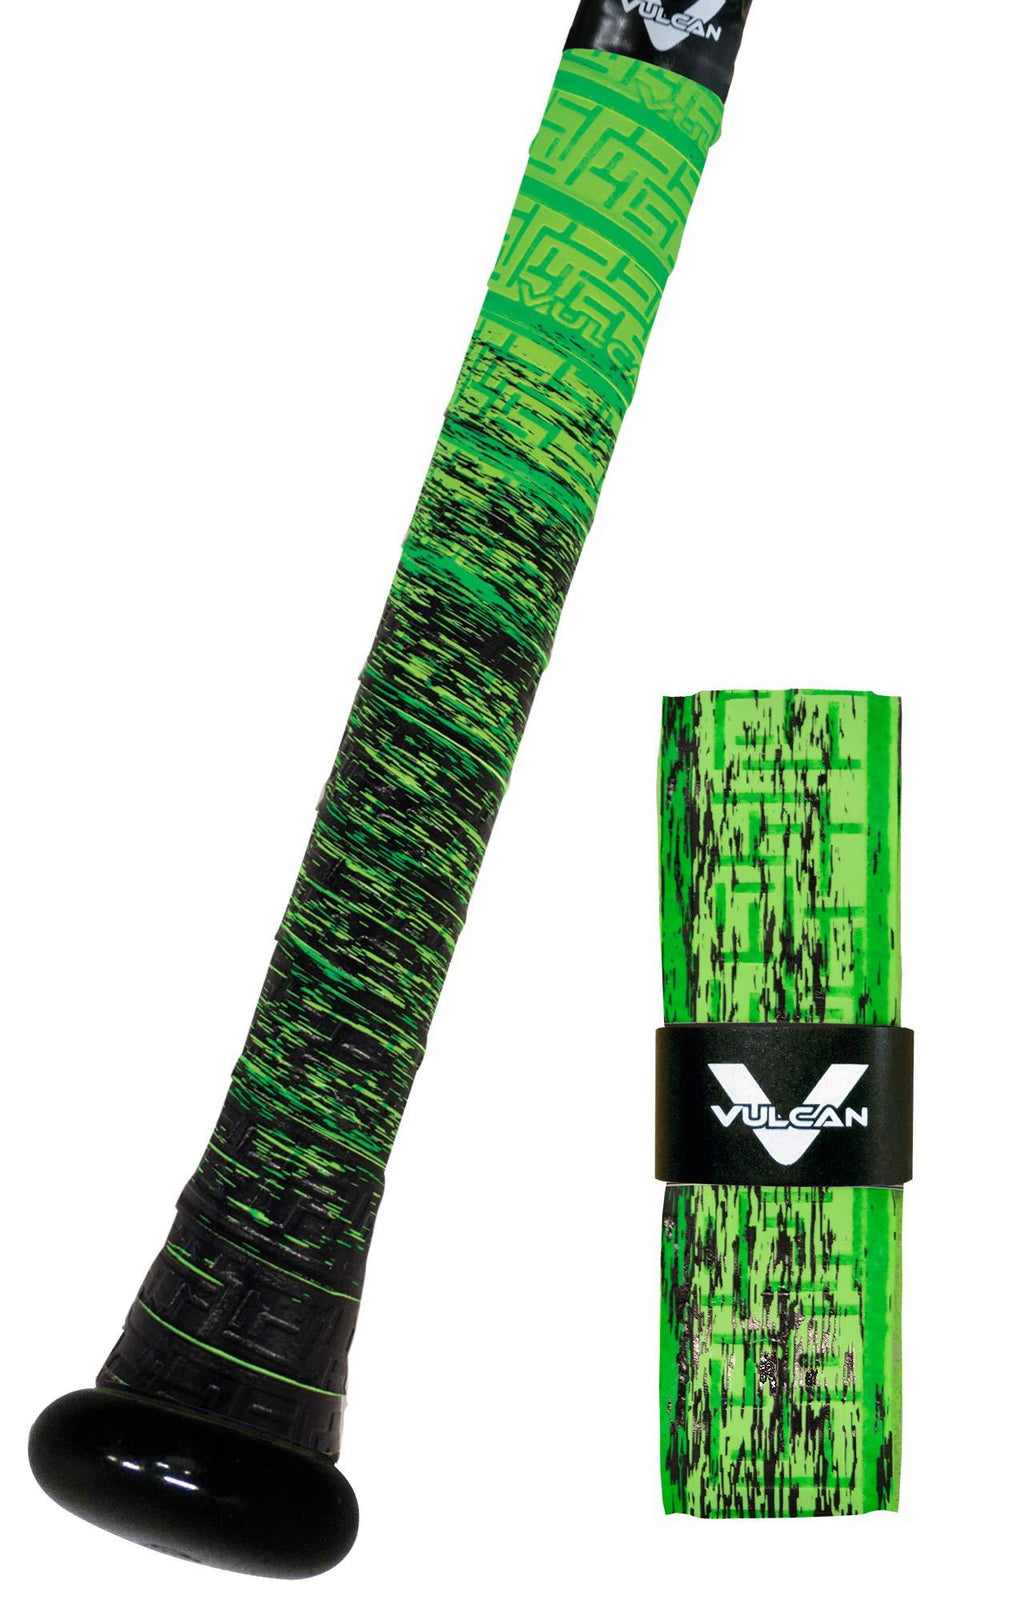 [AUSTRALIA] - Vulcan 0.50mm Bat Grip/Green Slime 